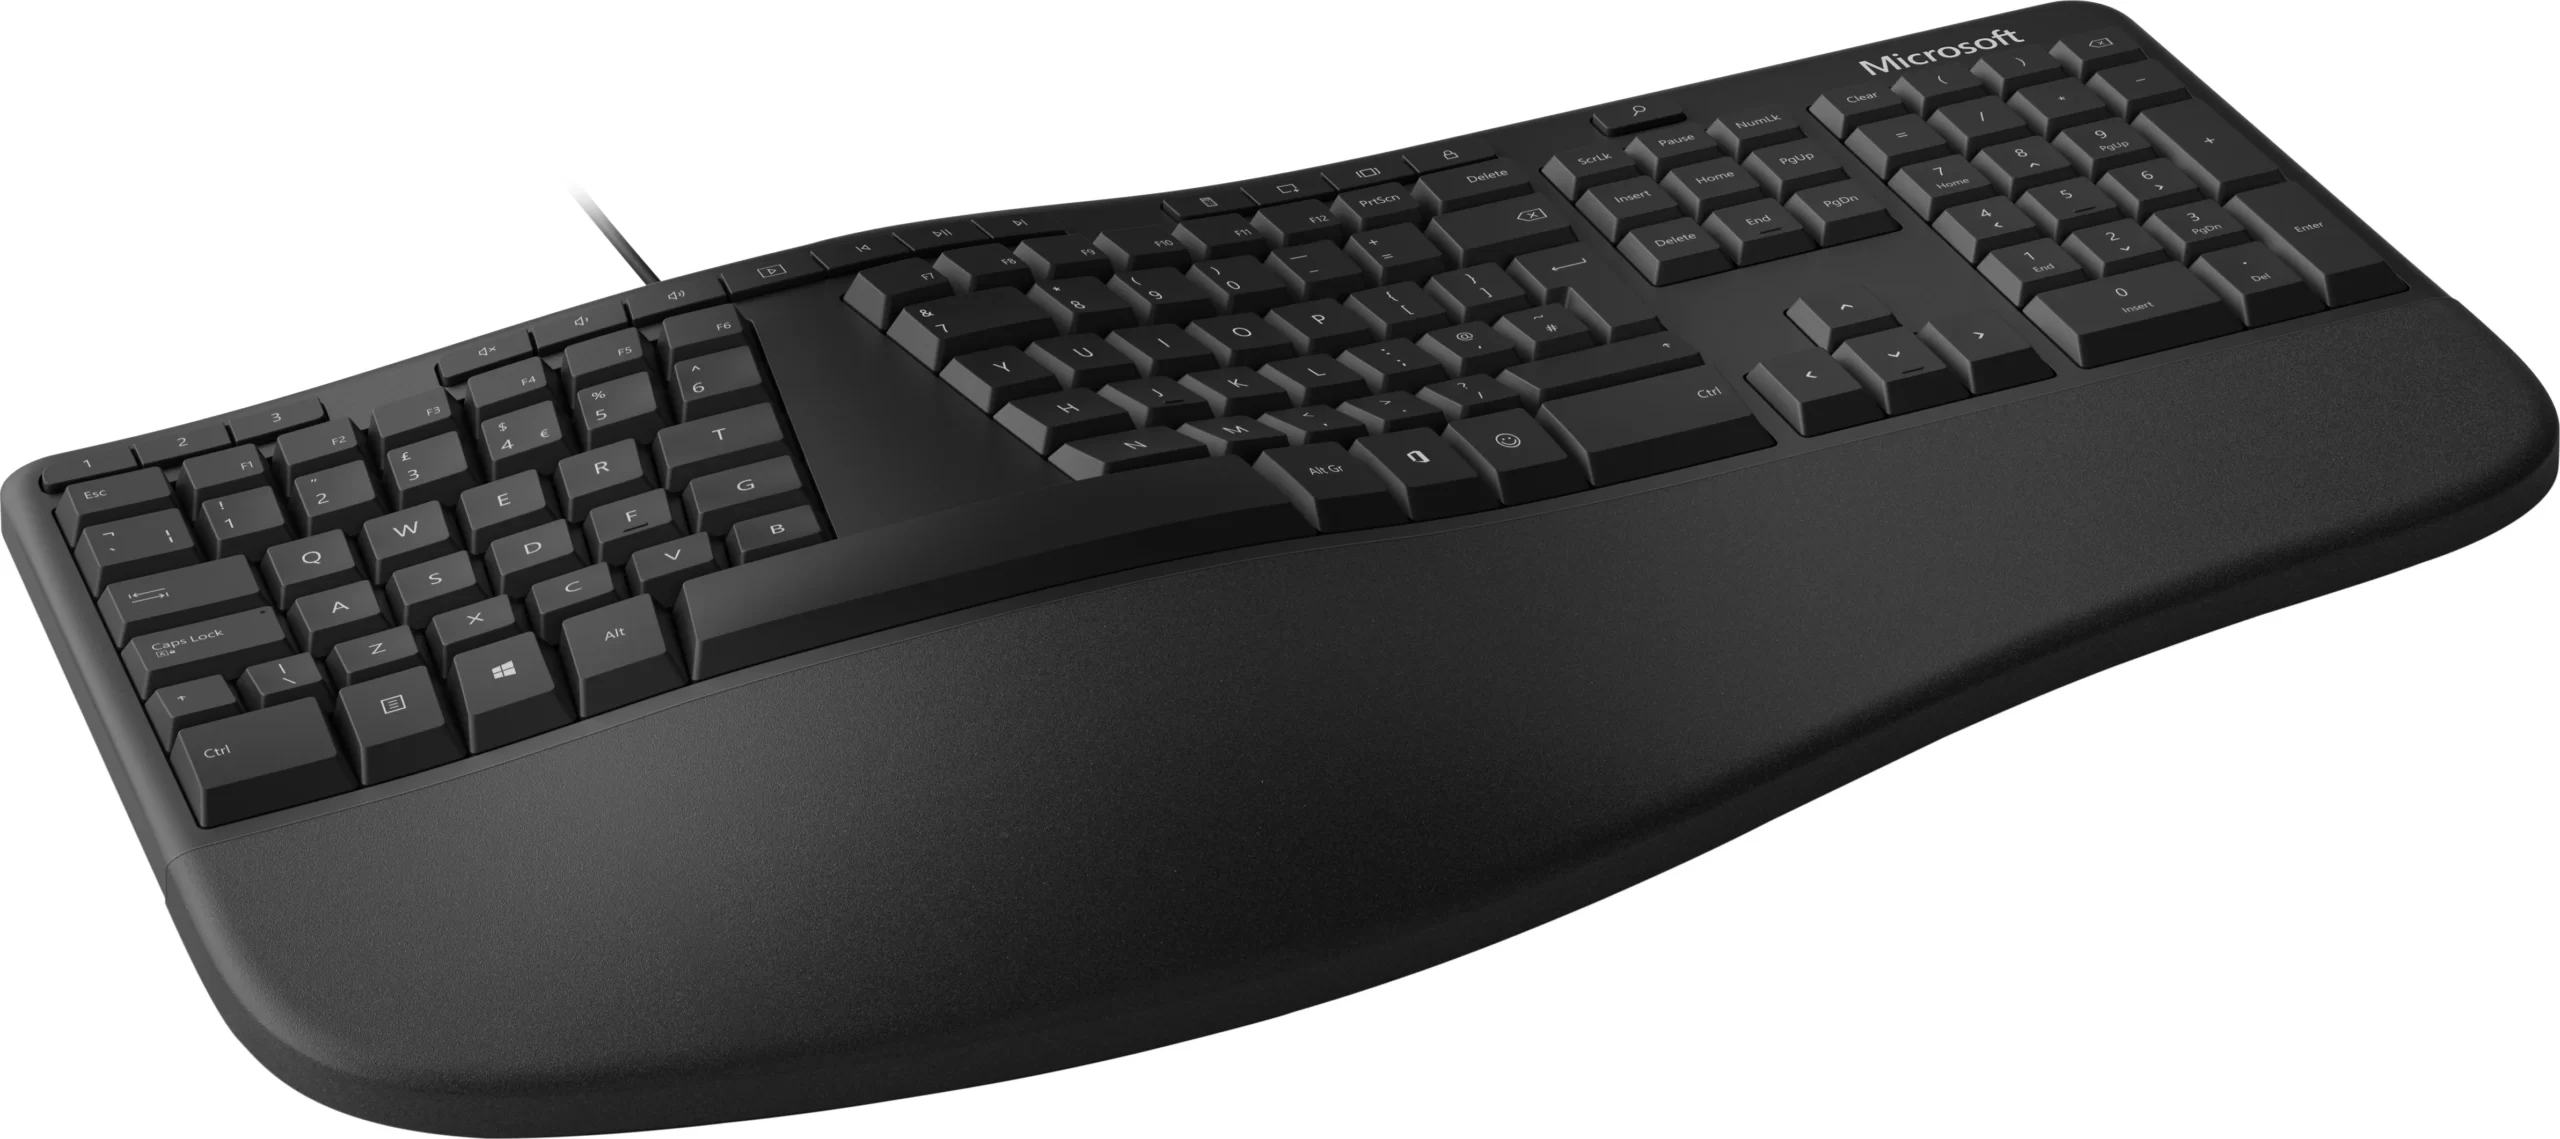 Photo of an ergonomic keyboard.